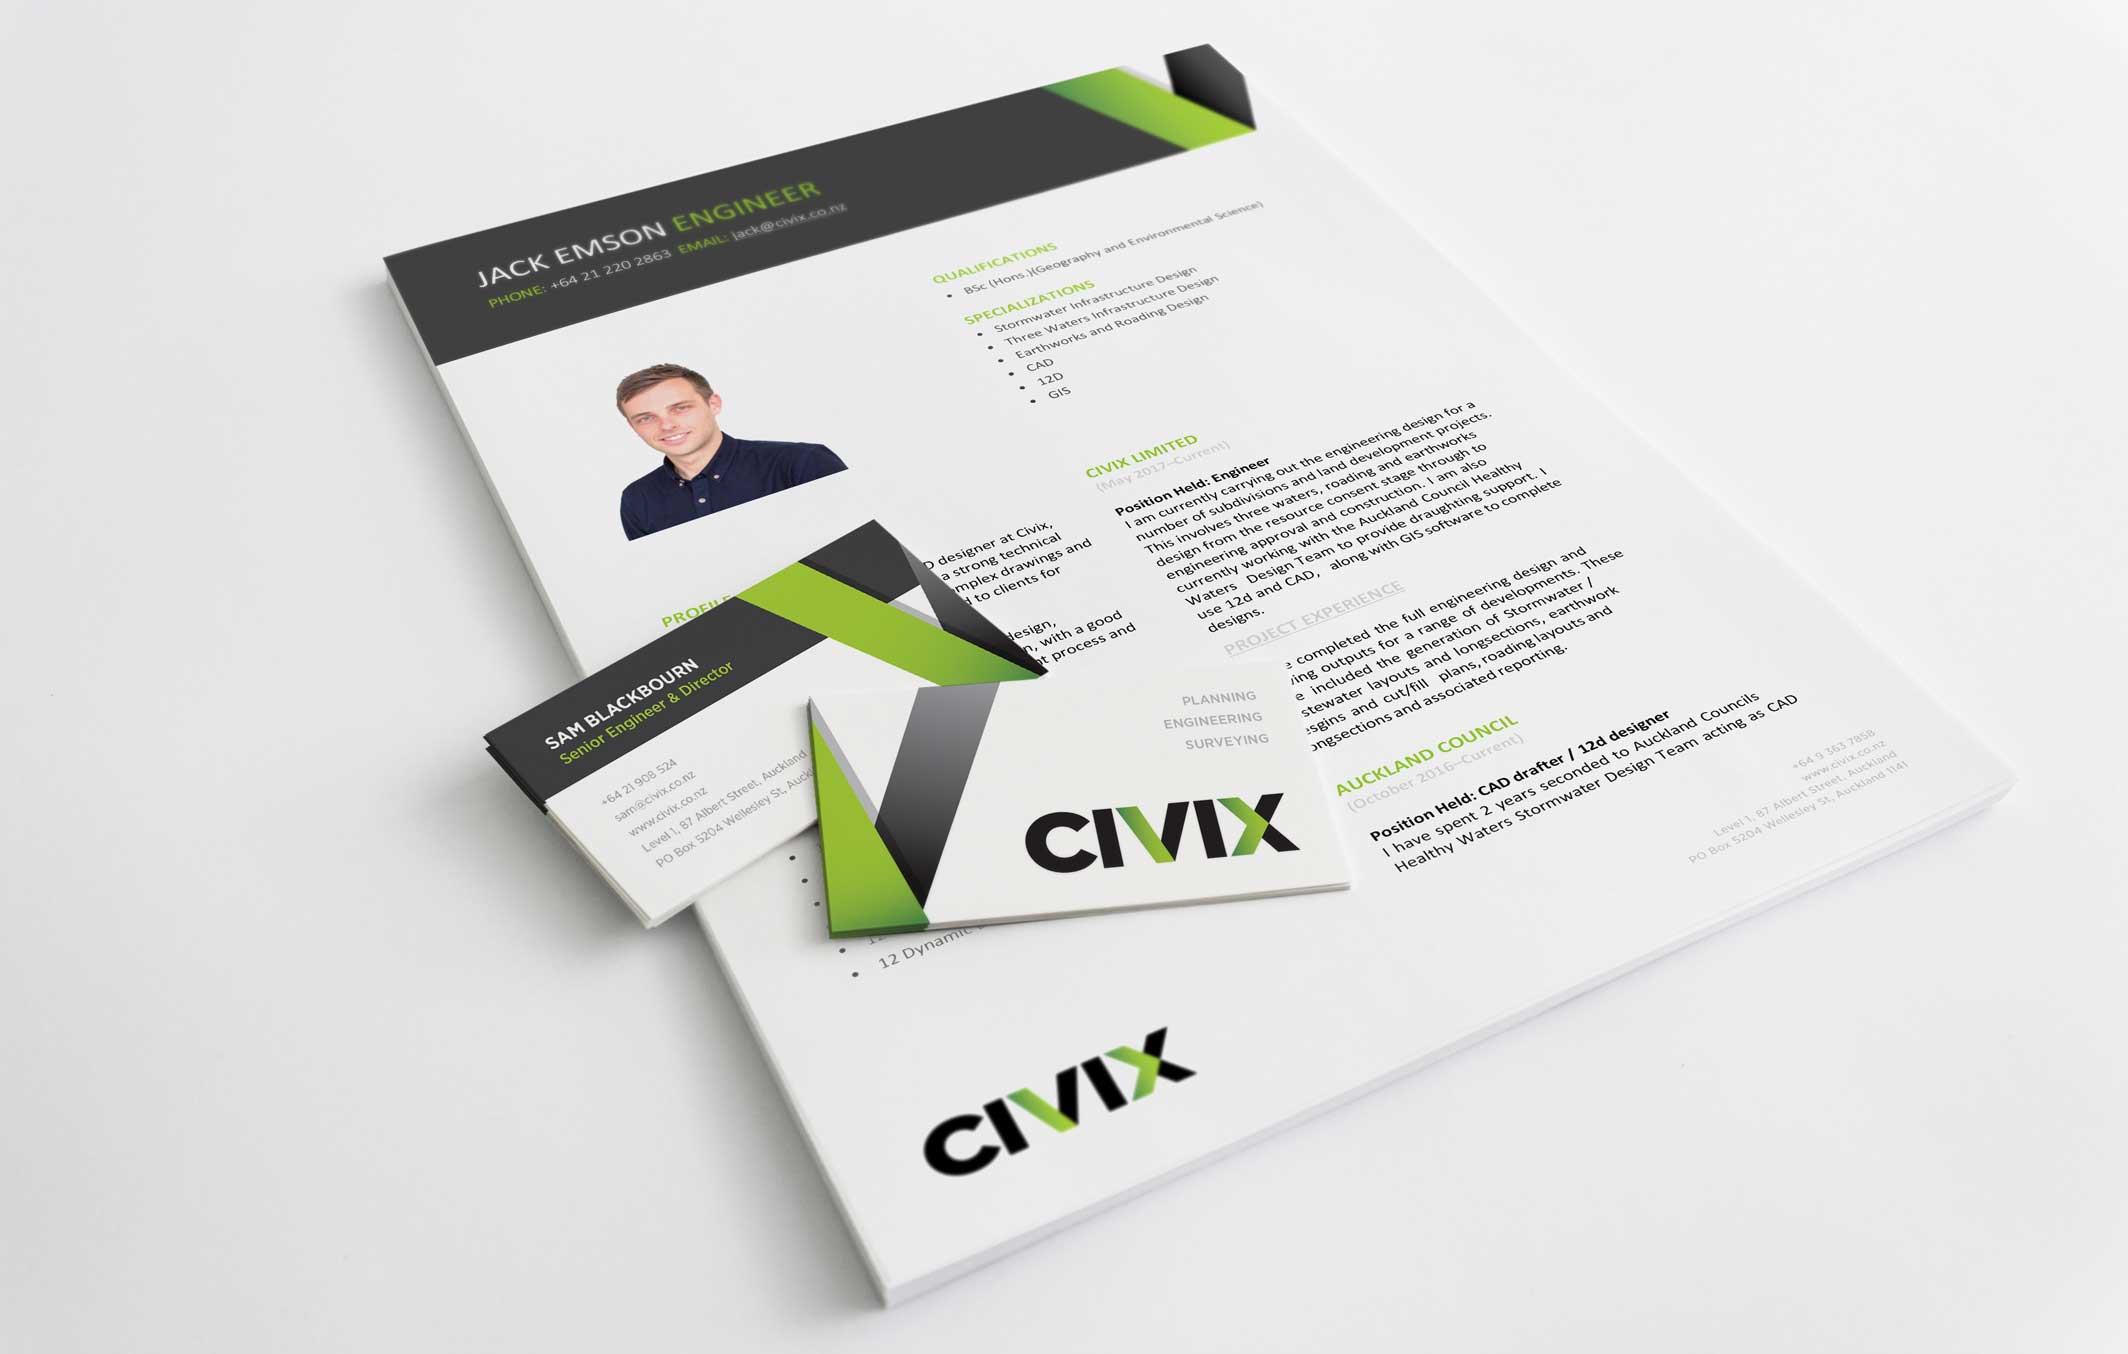 CIVIX-1.jpg